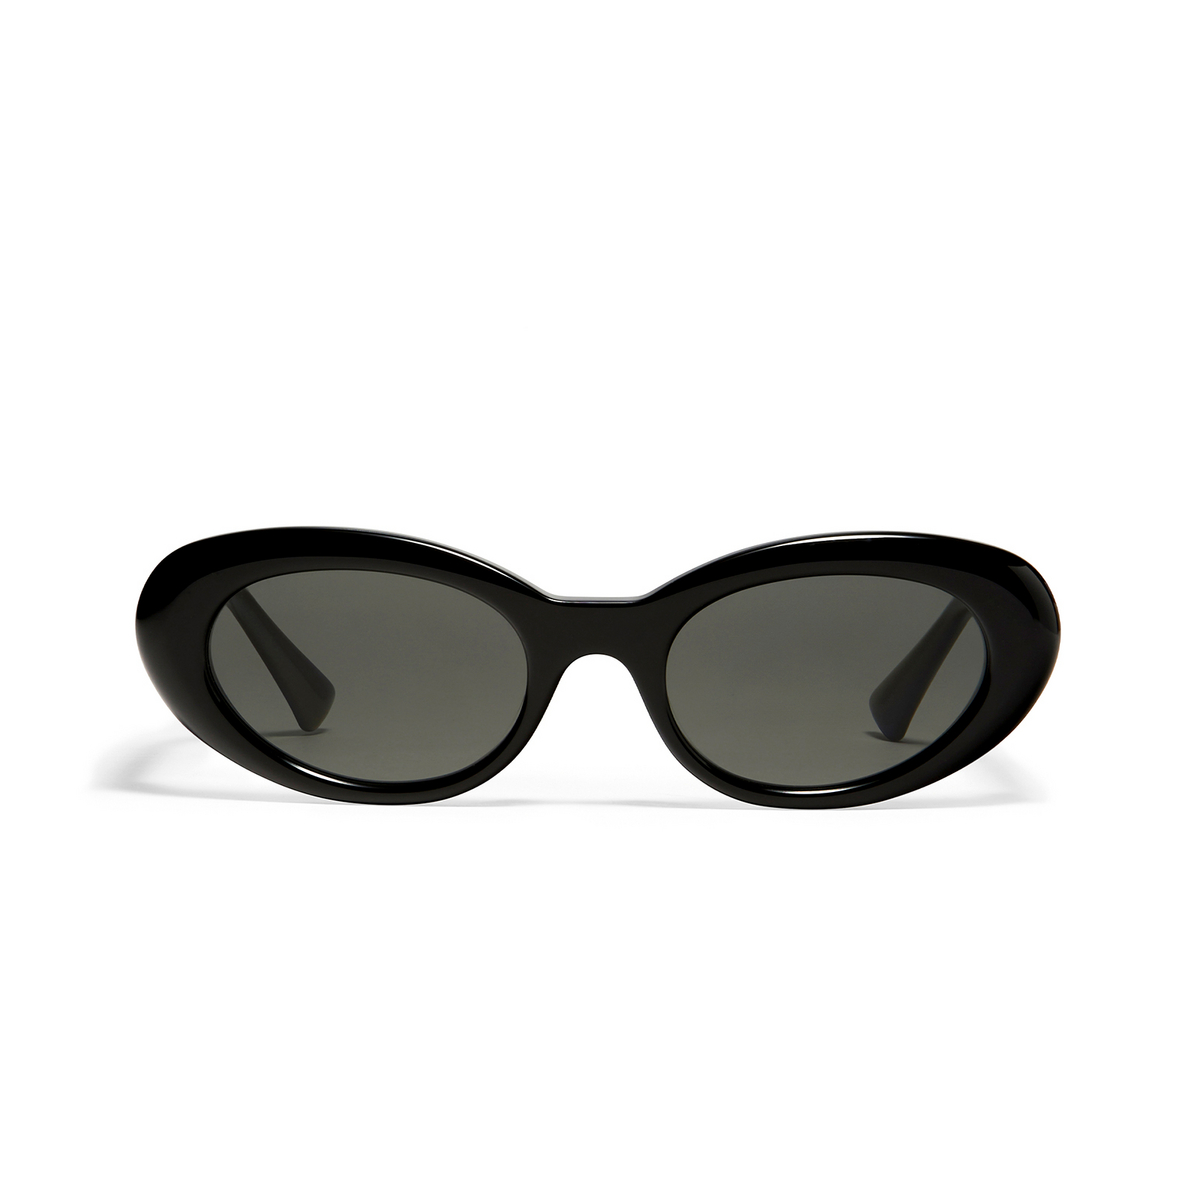 Gentle Monster® Cat-eye Sunglasses: Le color Black 01 - front view.